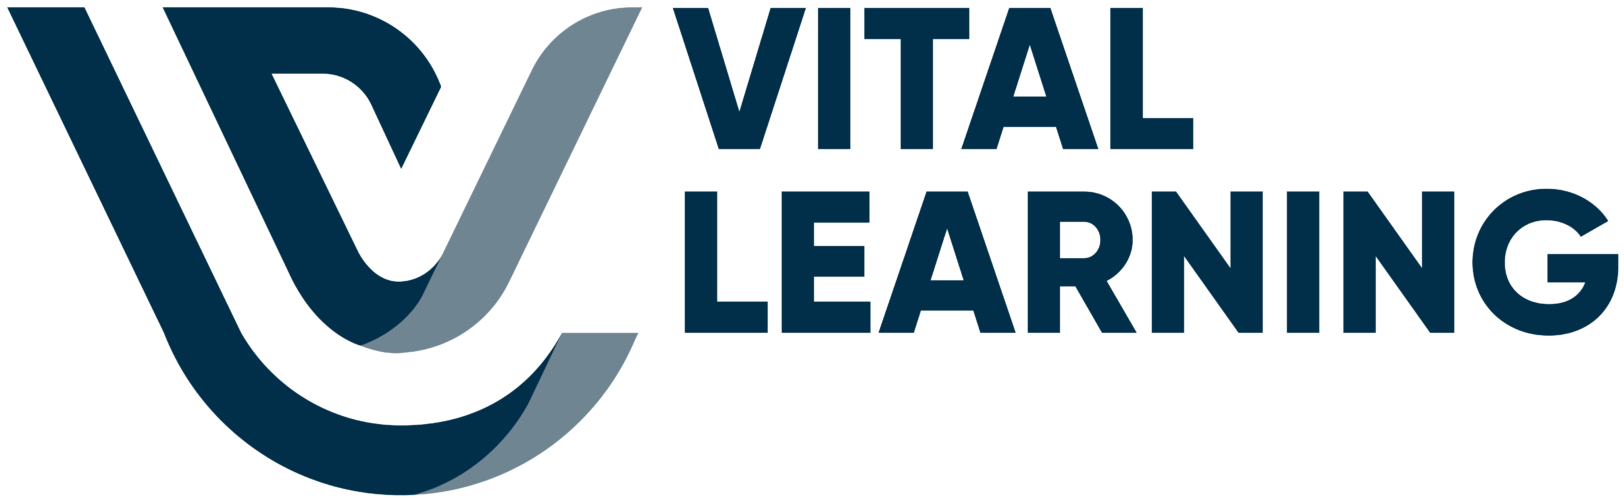 Vital Learning Original Logo 01